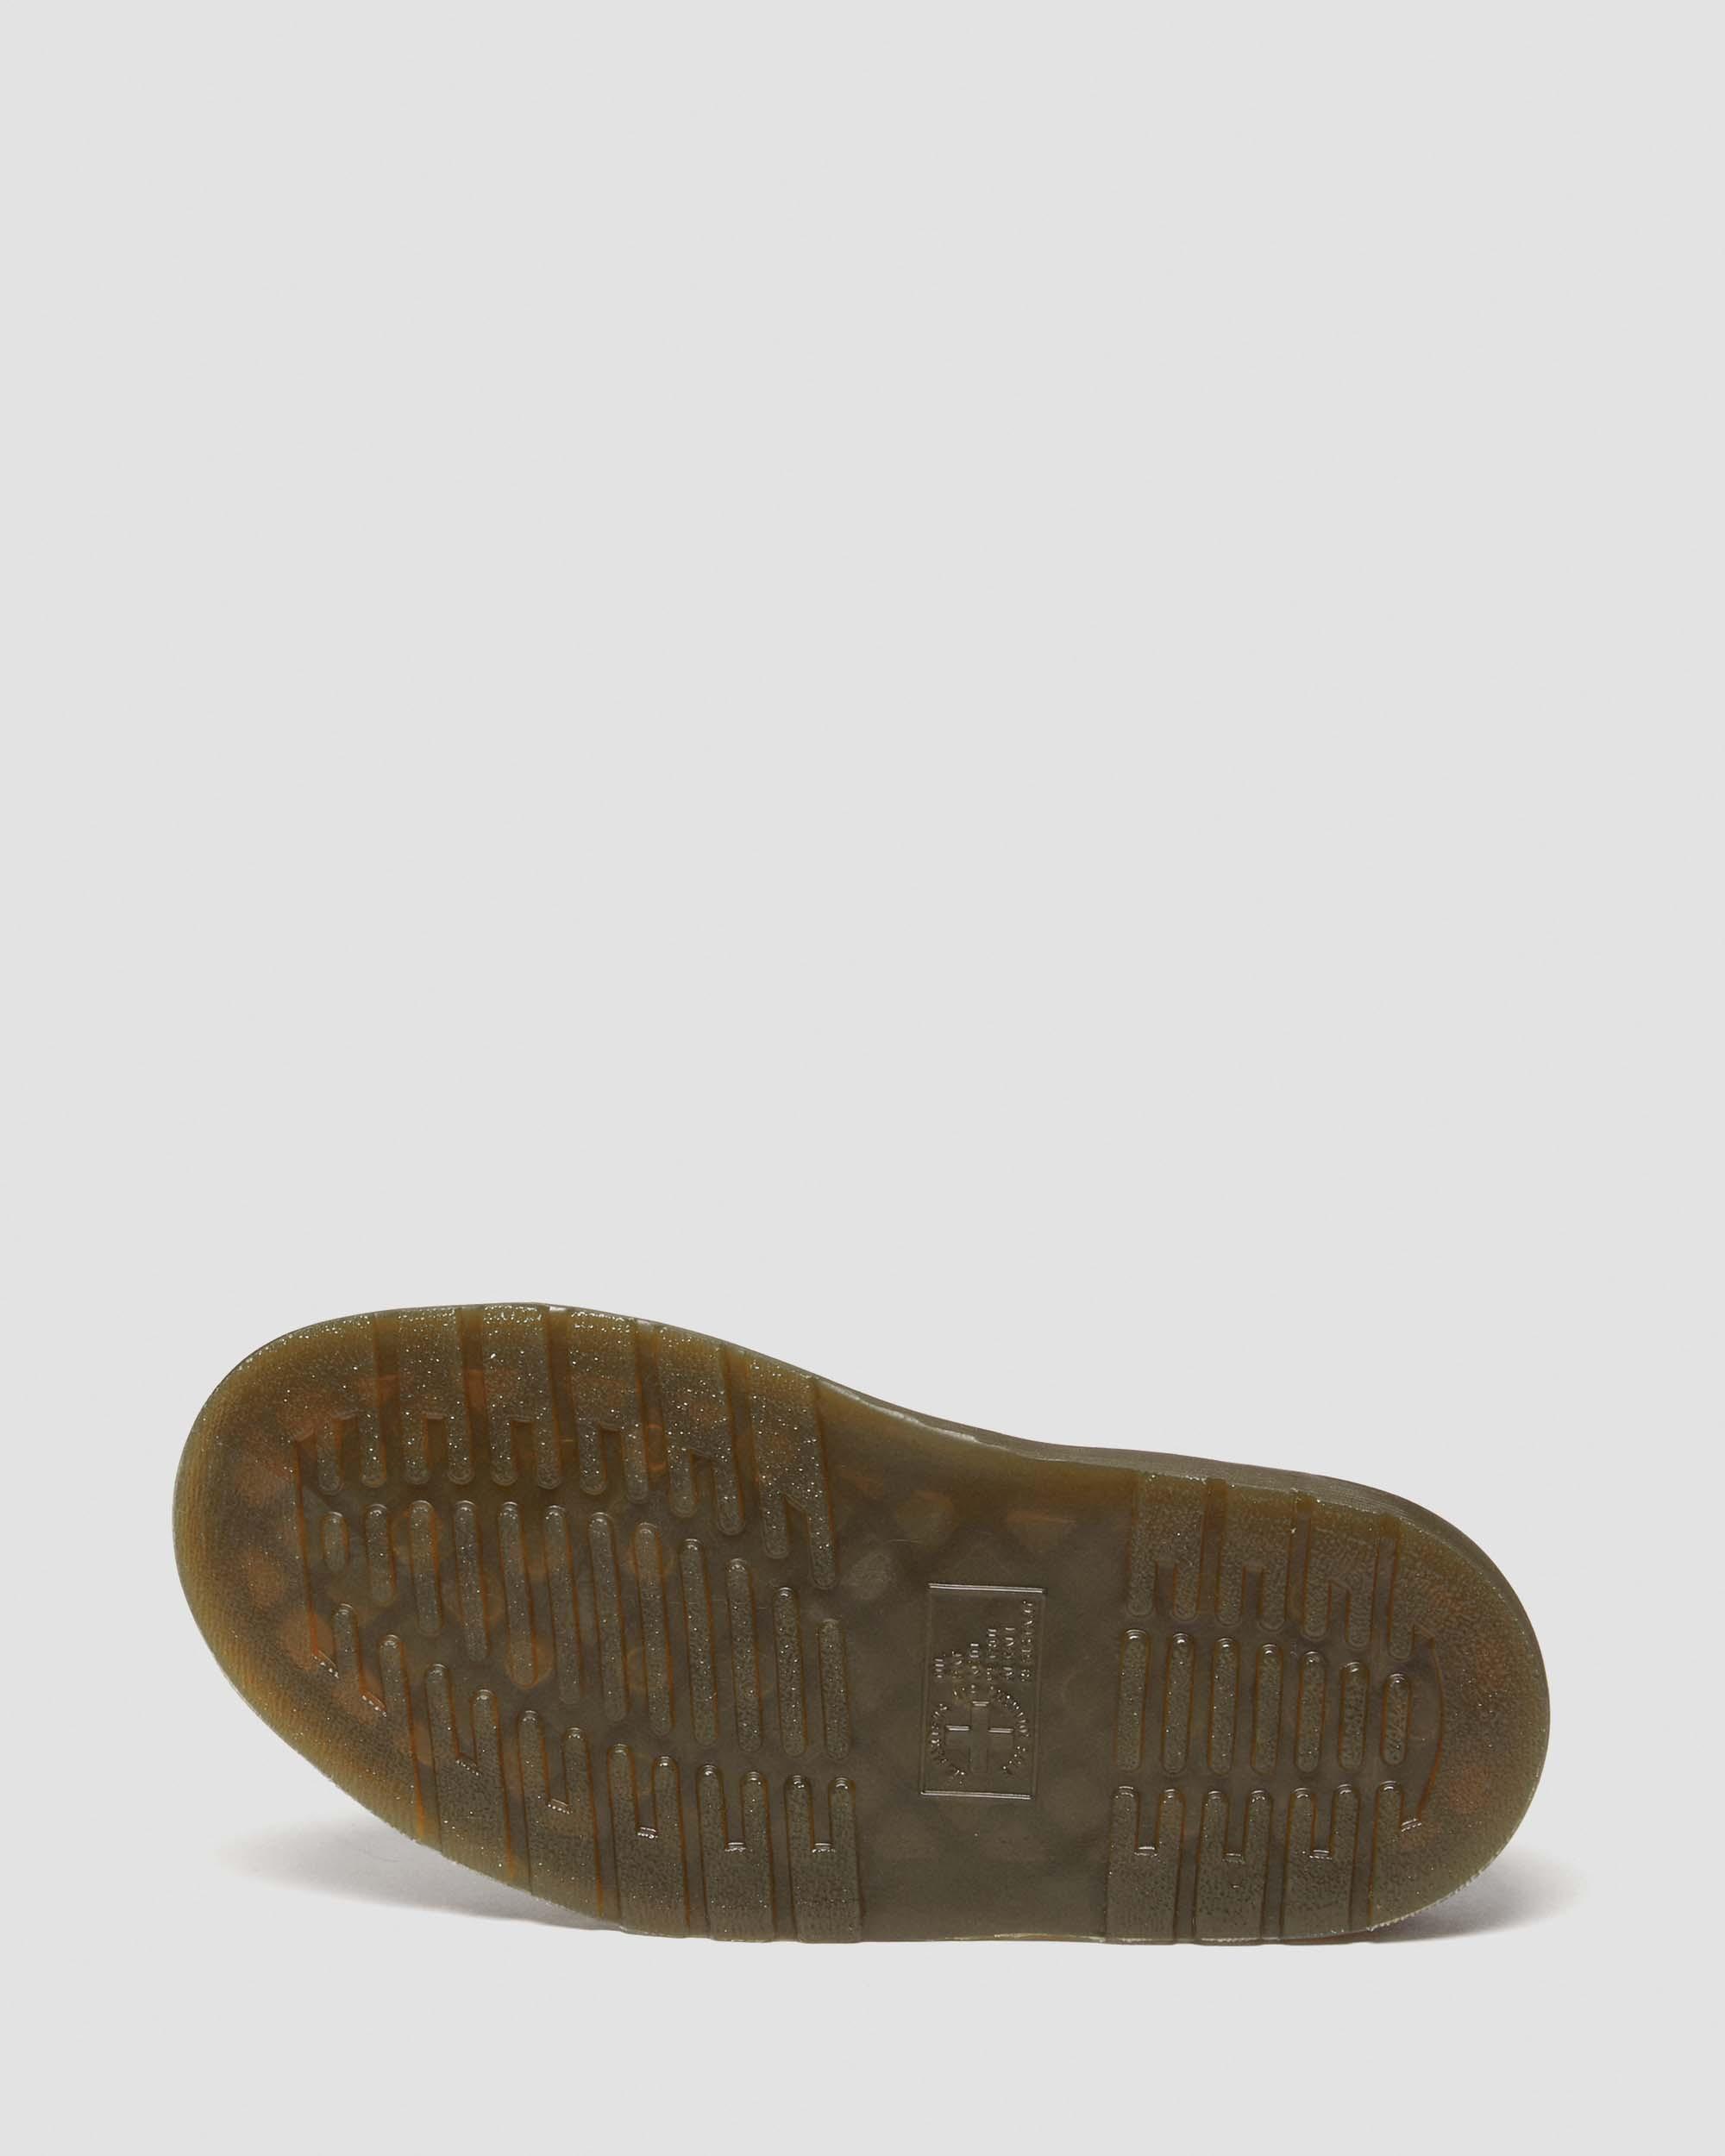 Gryphon Tumbled Nubuck Leather Platform Sandals in Savannah Tan